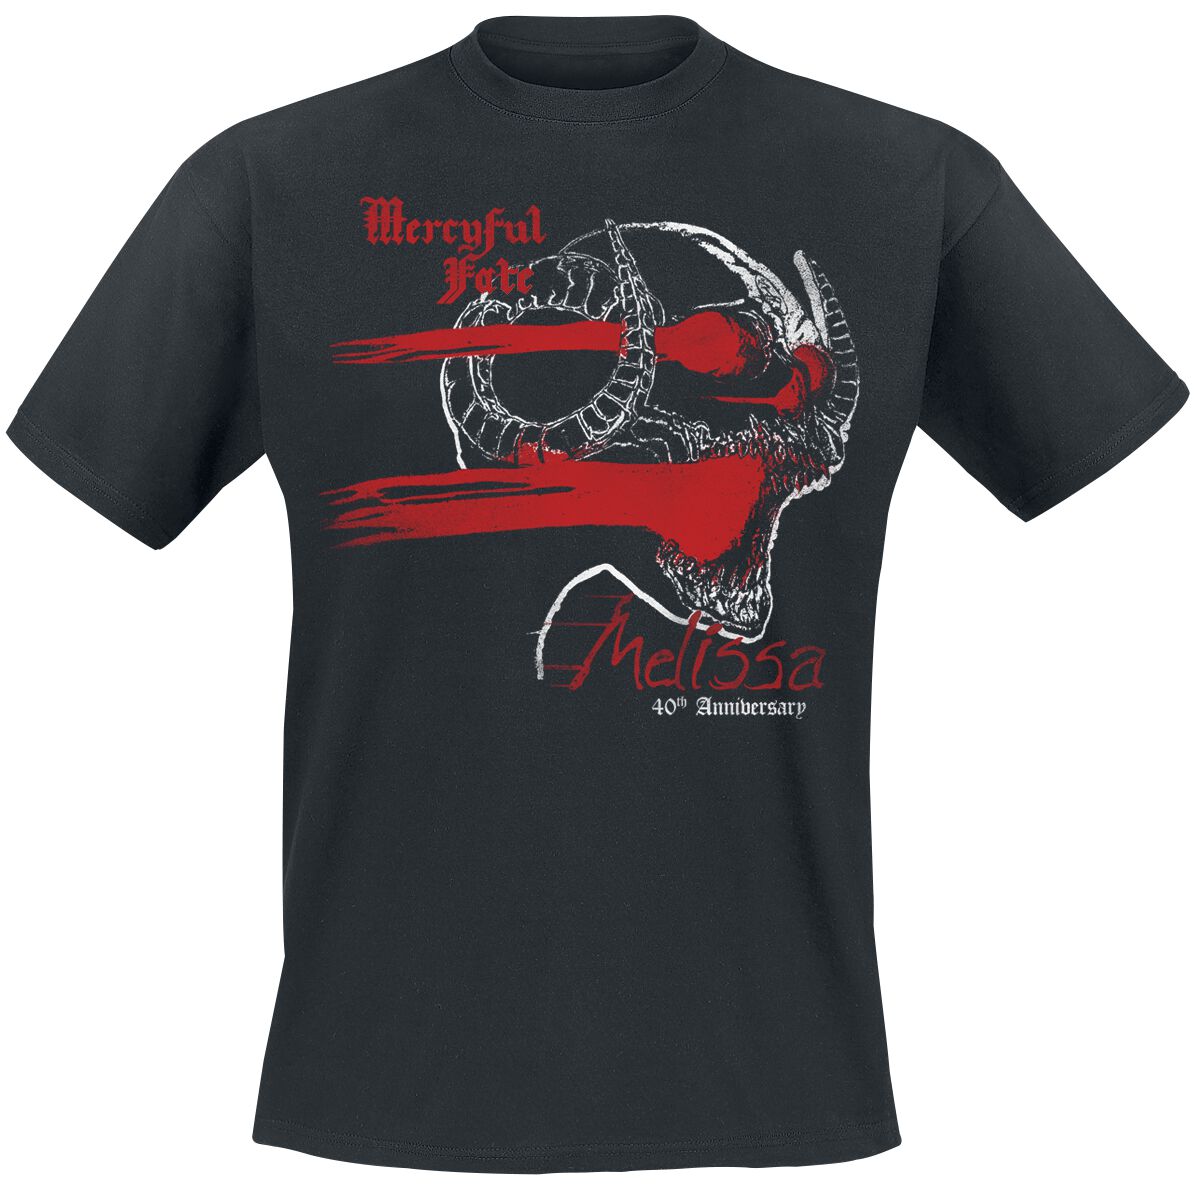 Mercyful Fate Melissa 40th Anniversary Cross T-Shirt schwarz in M